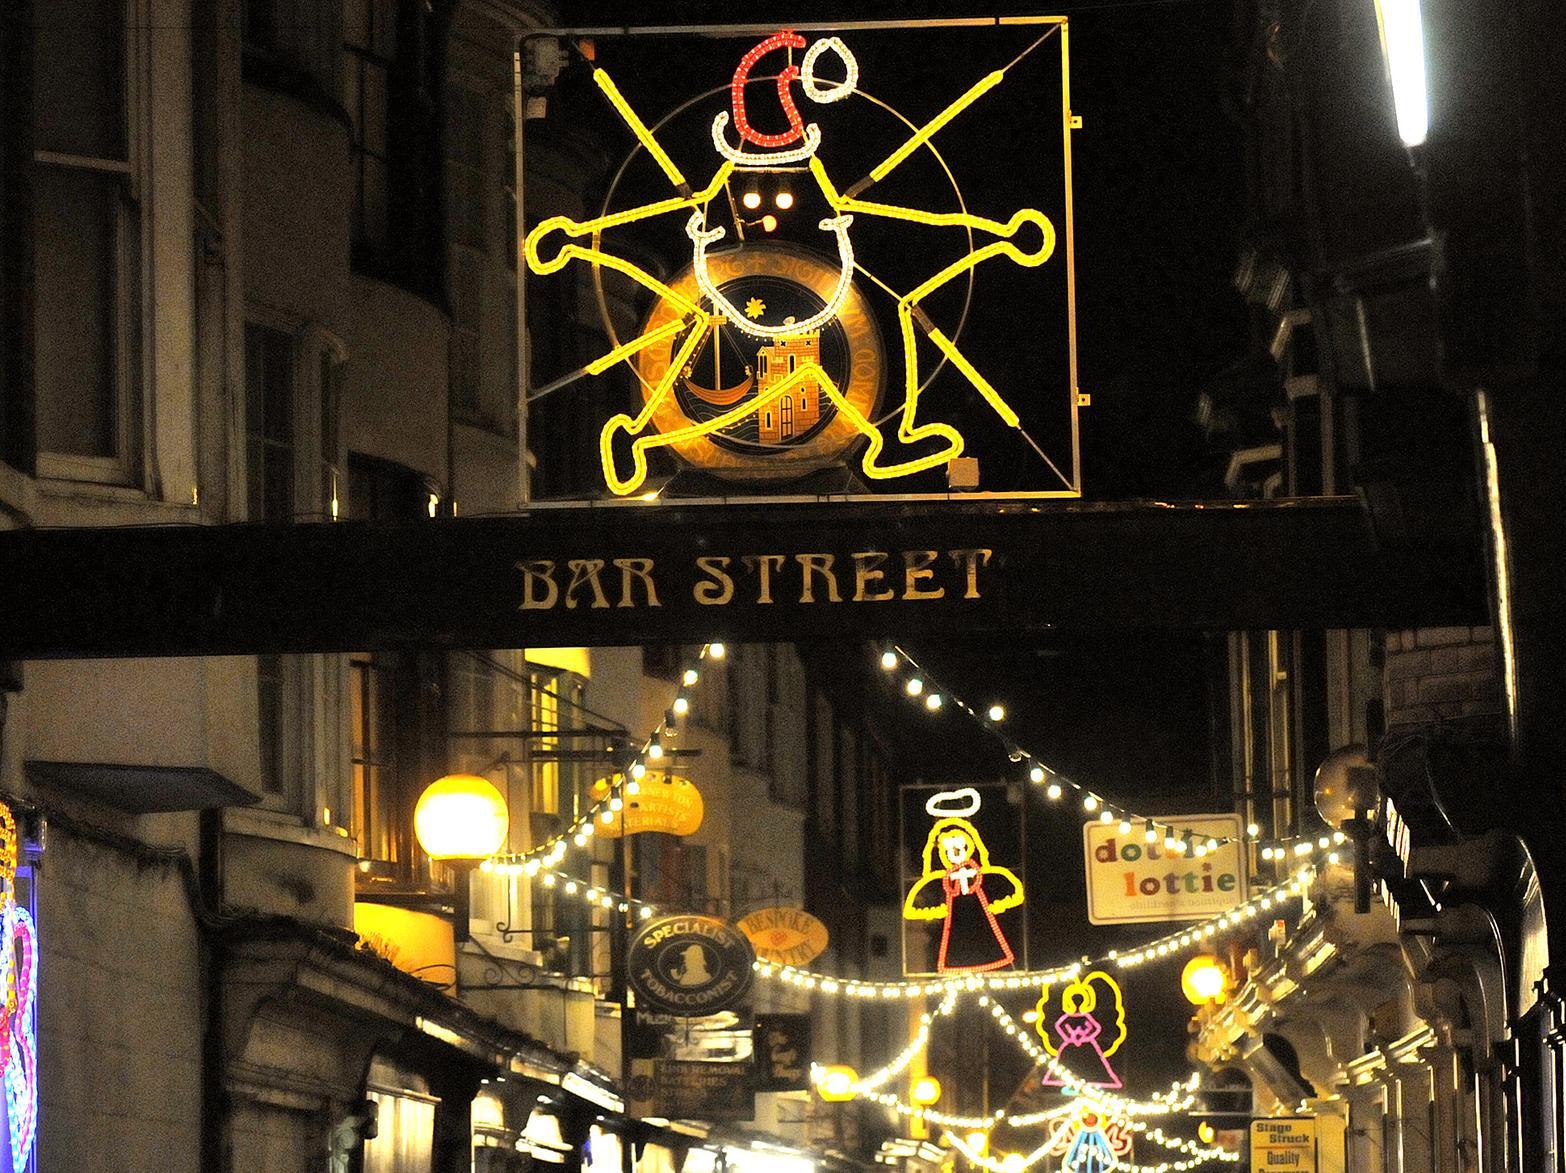 Bar Street lit up looking festive.